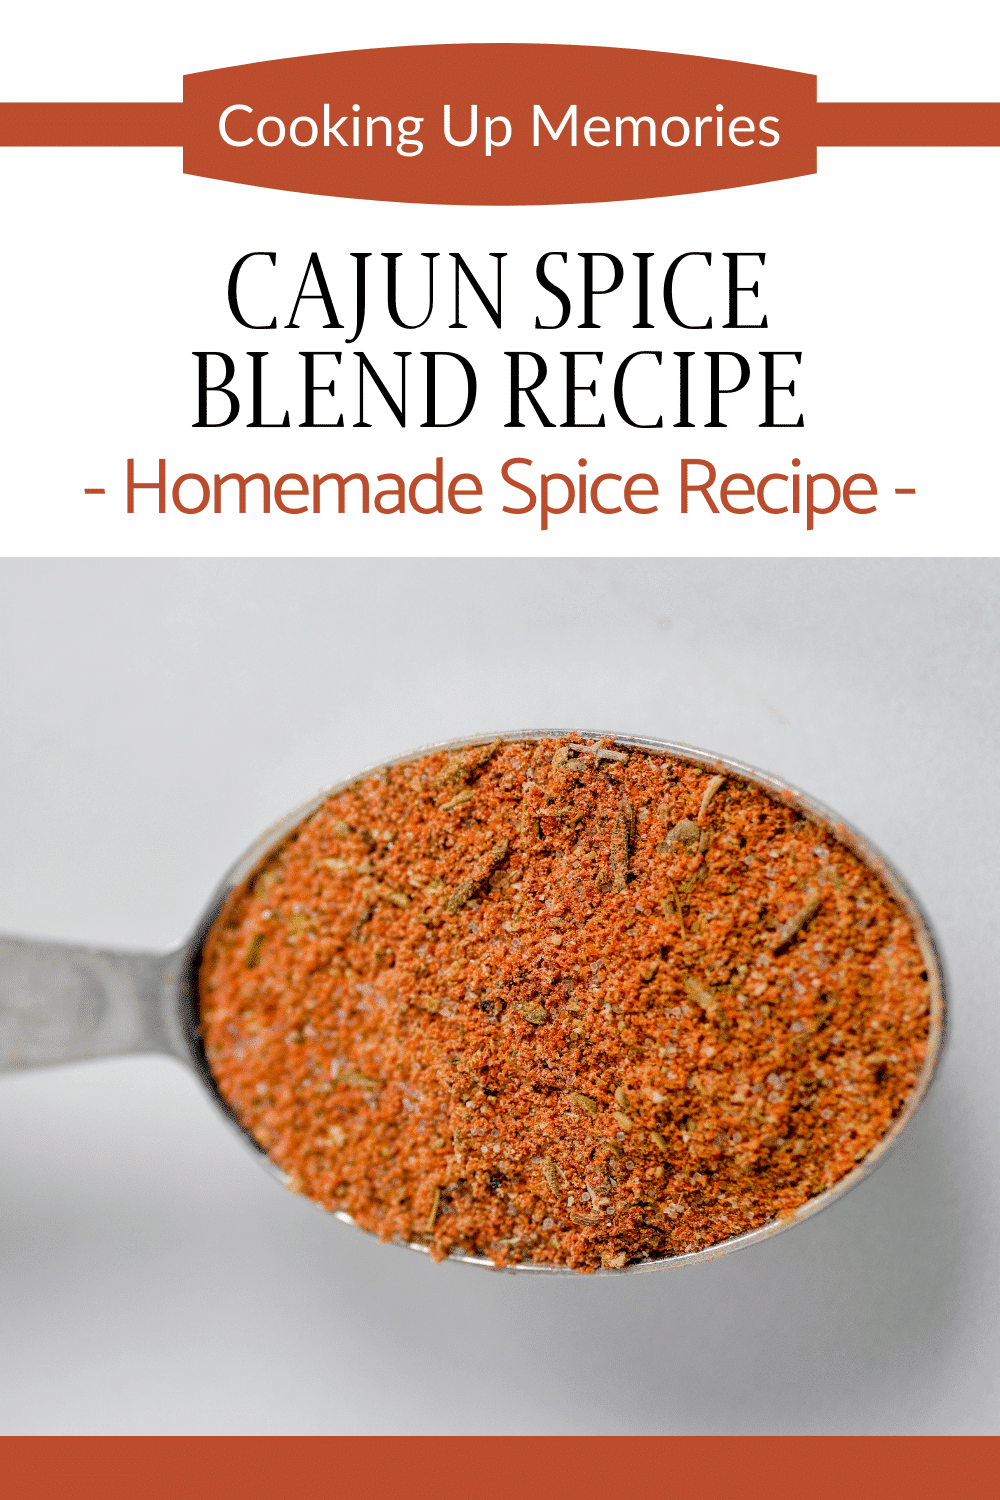 Cajun Spice Blend Recipe - Cooking Up Memories